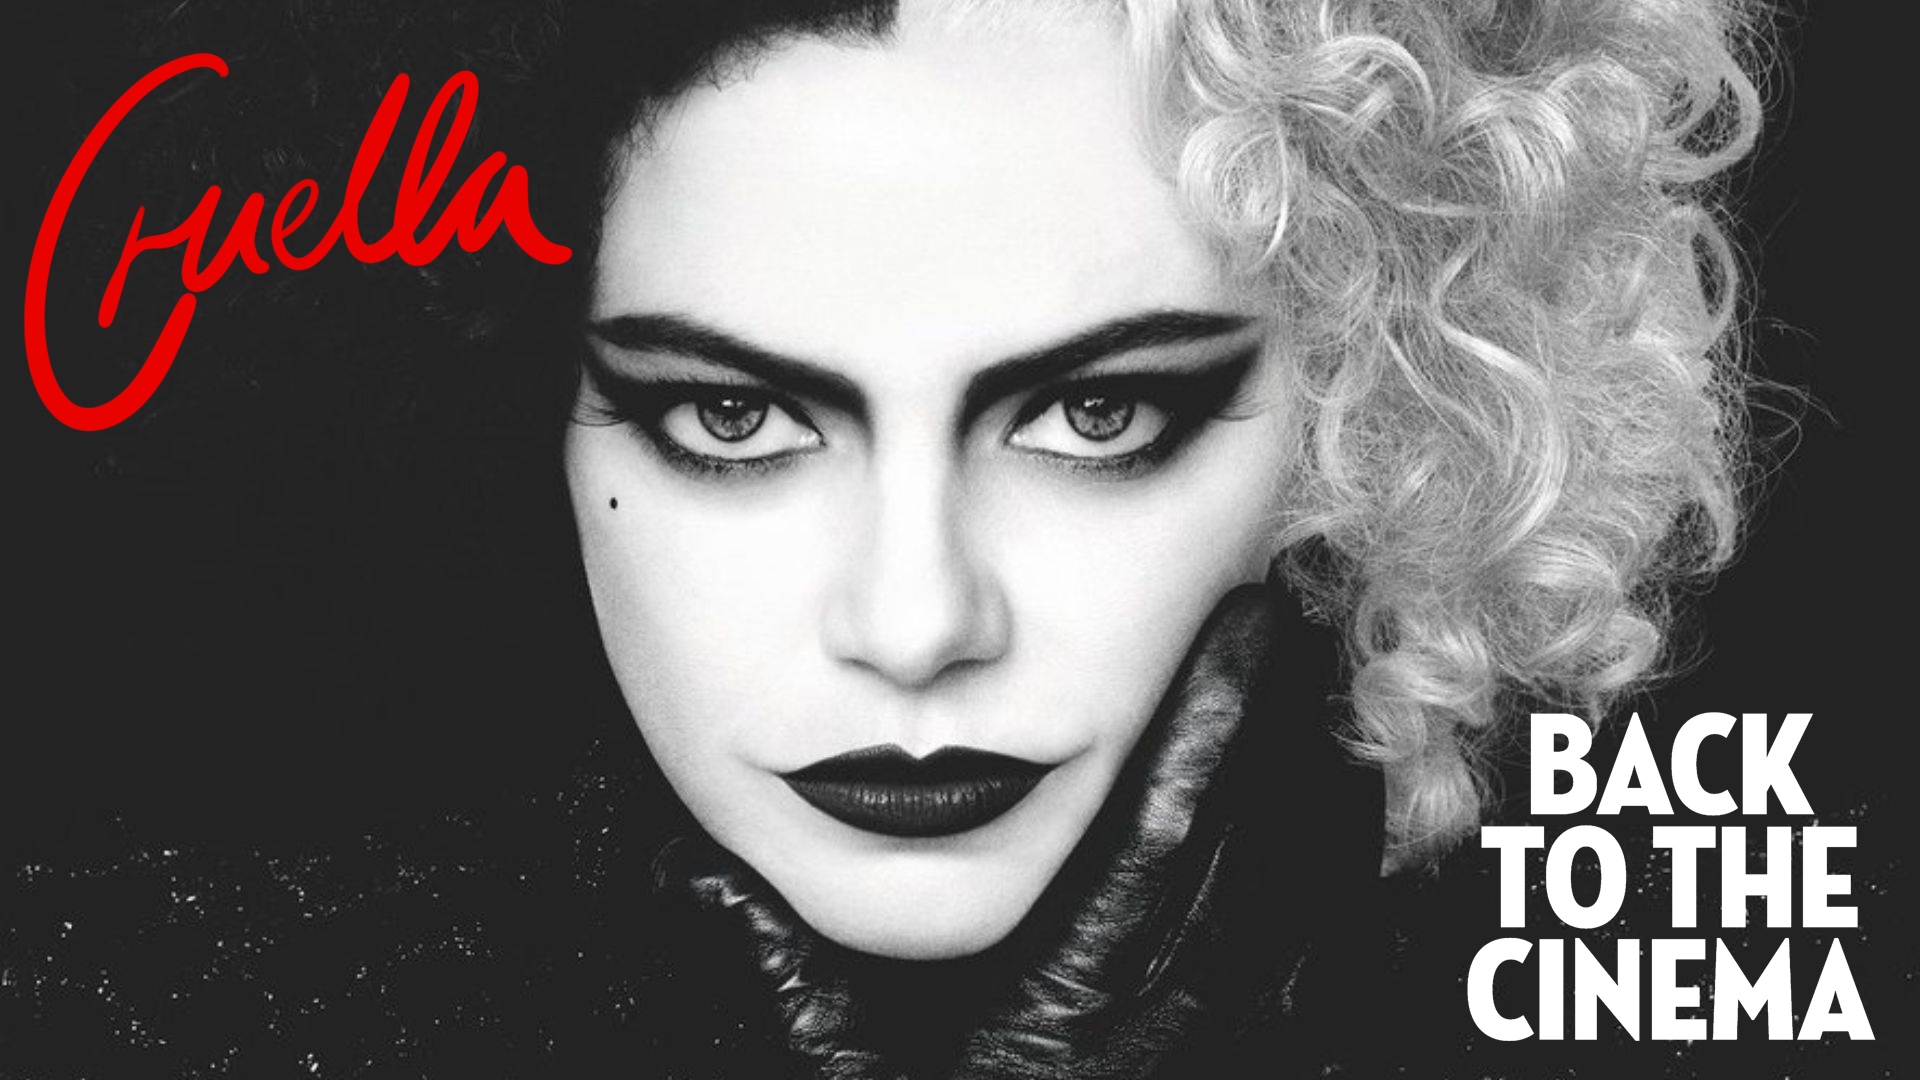 Emma Stone Transforms Into 'Cruella' in Behind-the-Scenes Look